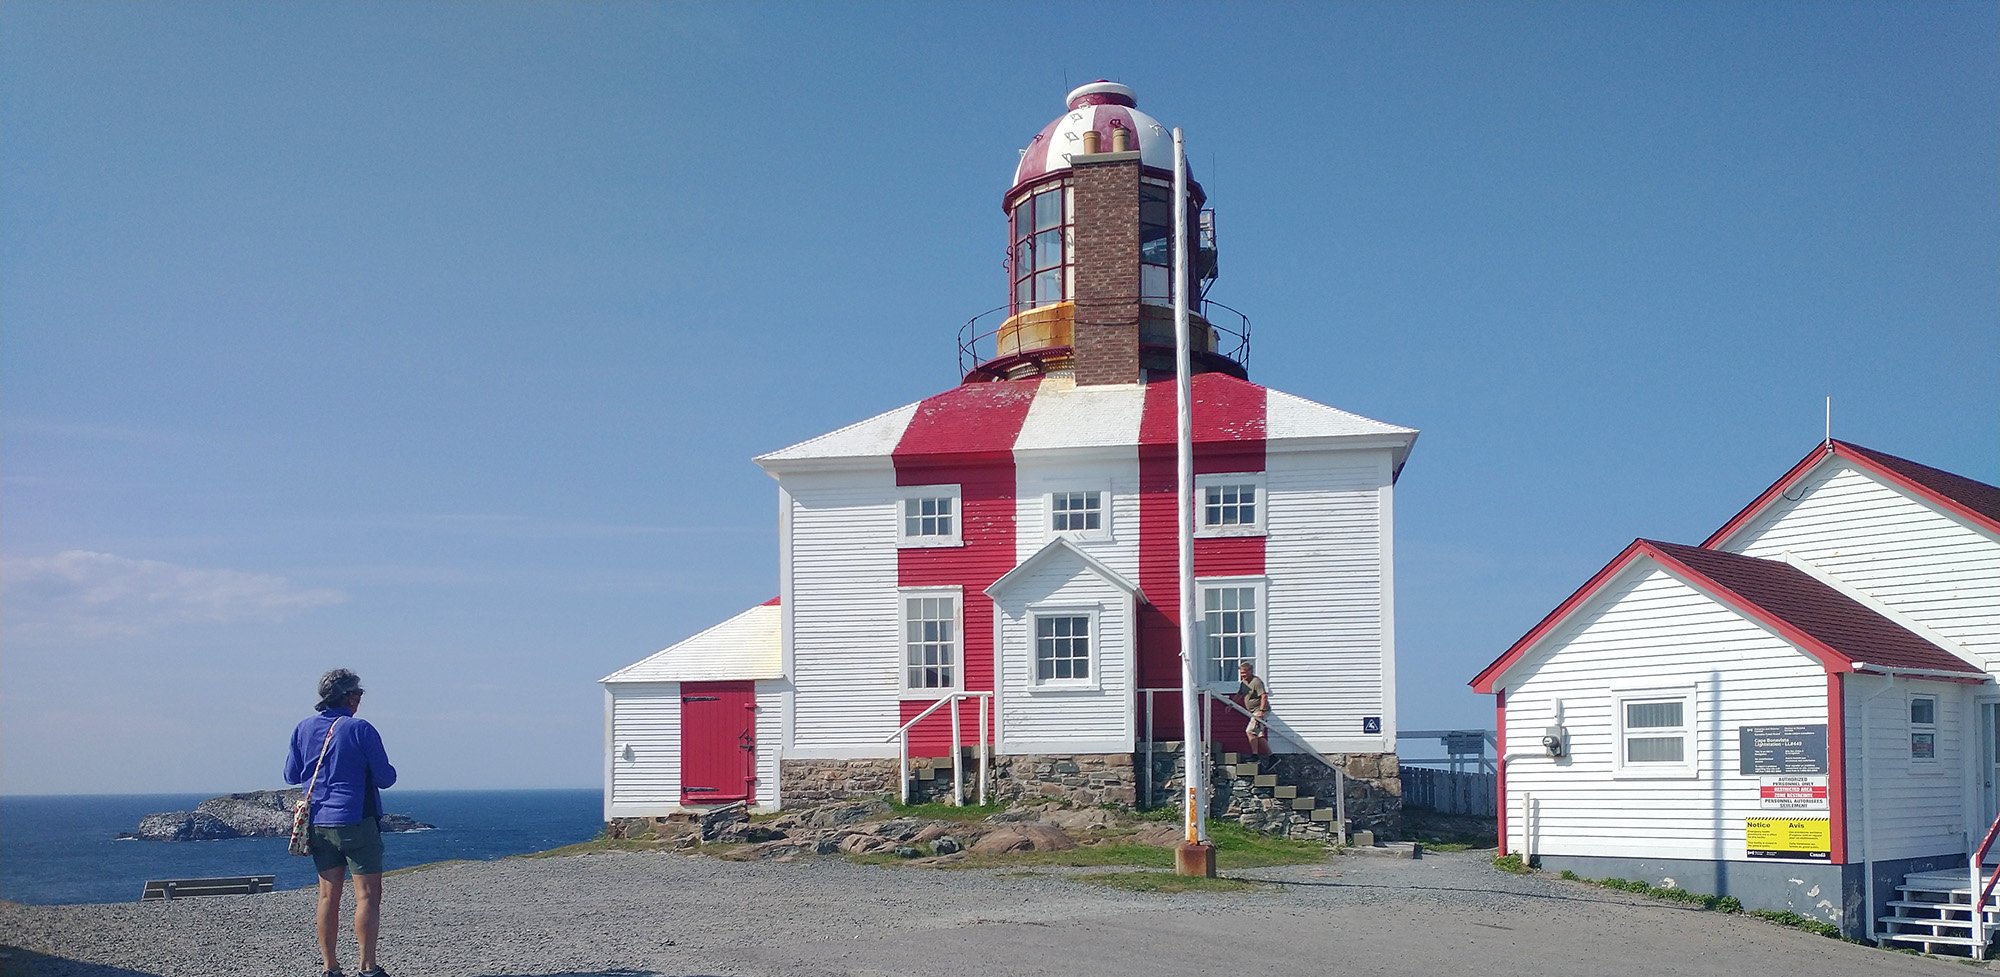 The lighthouse itself.